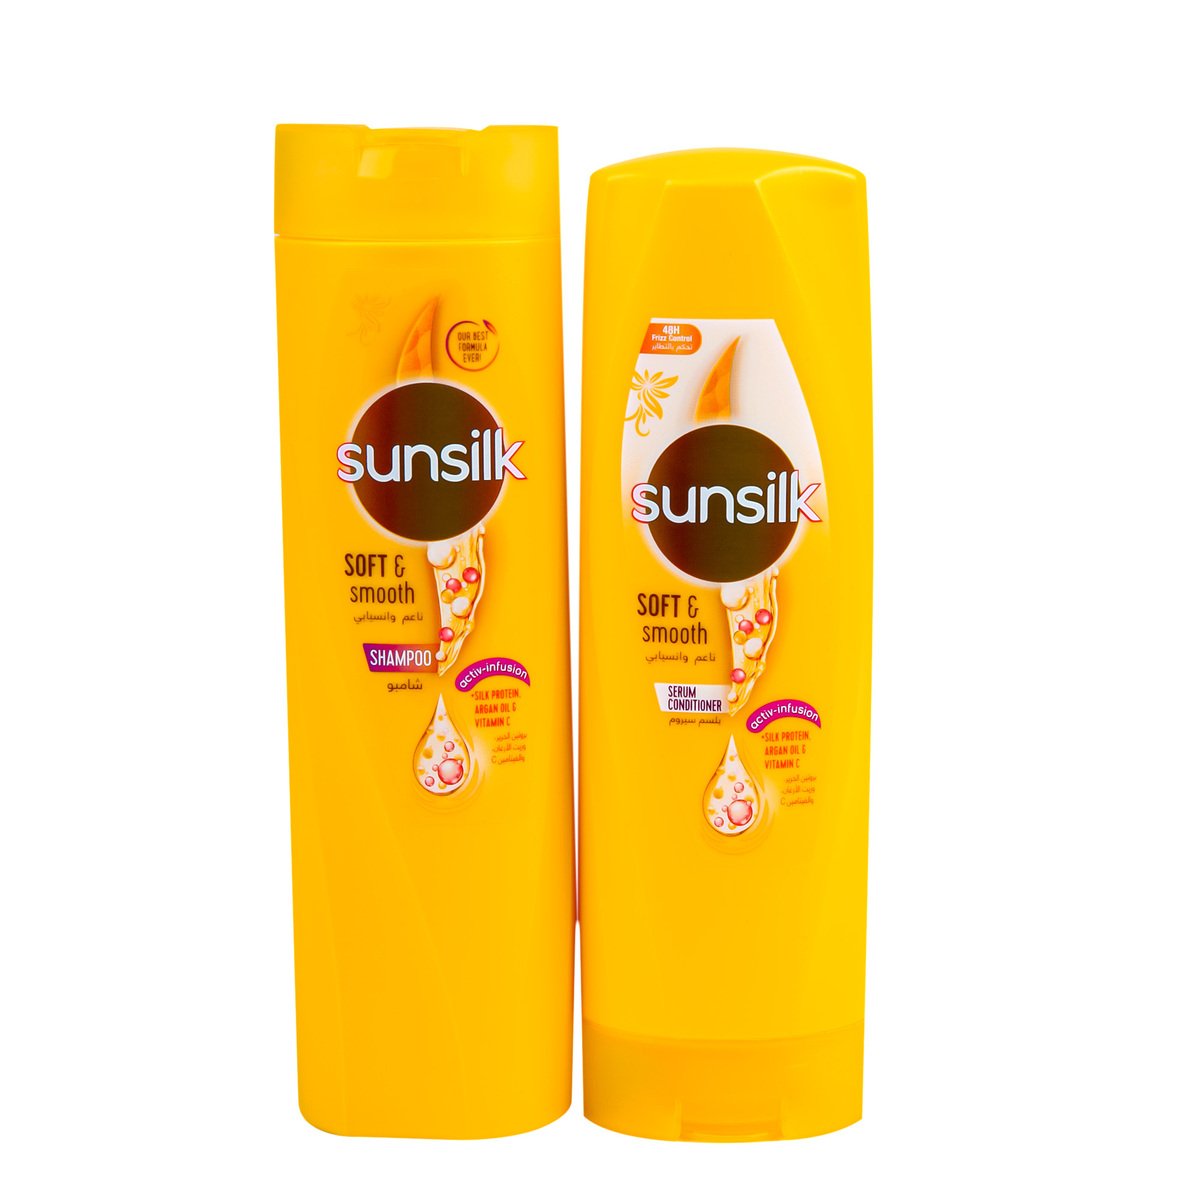 Sunsilk Soft & Smooth Shampoo 400 ml + Conditioner 320 ml